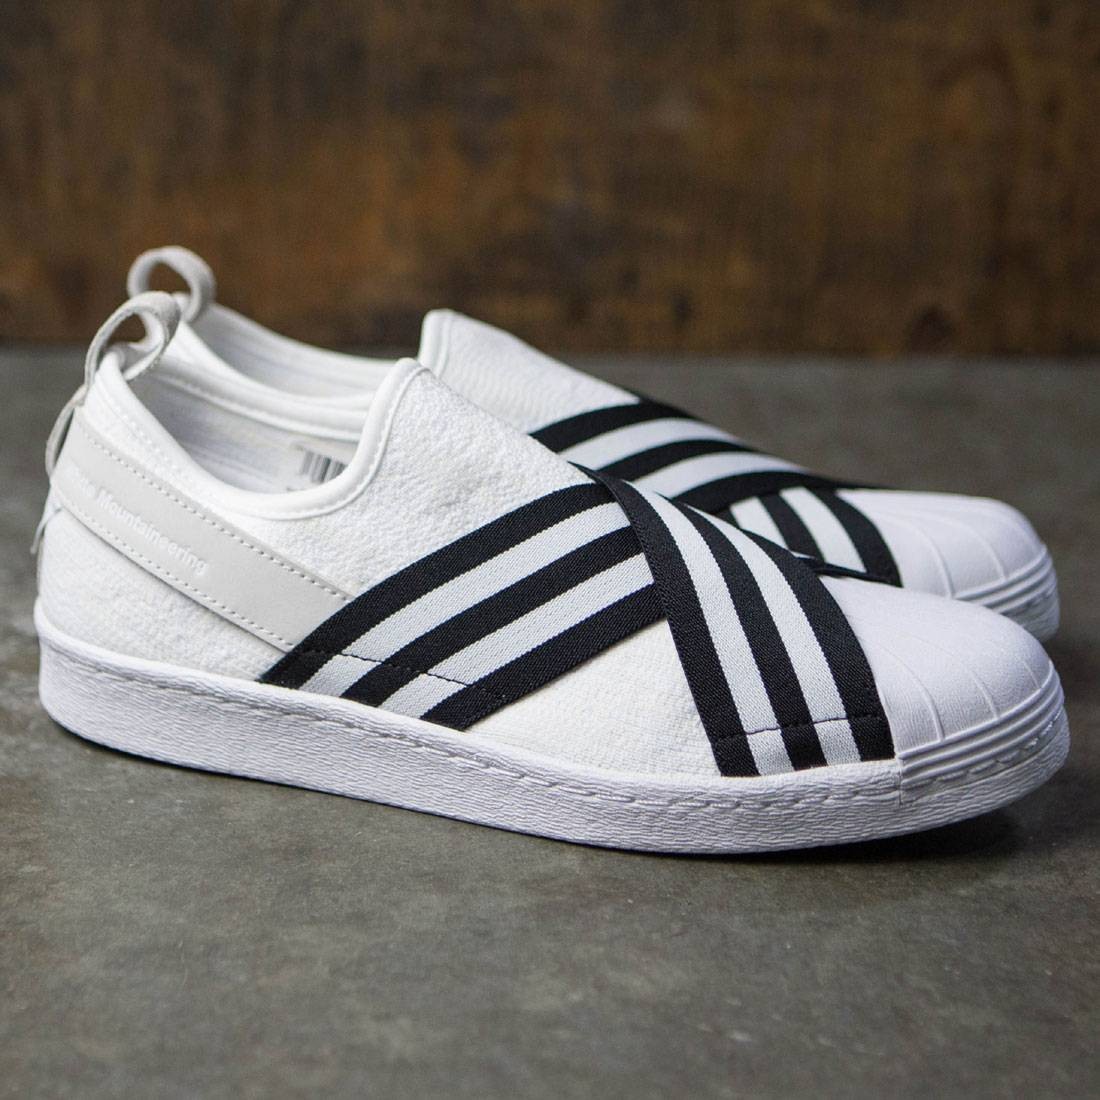 Adidas Men White Mountaineering Superstar Slip-On Primeknit white core black